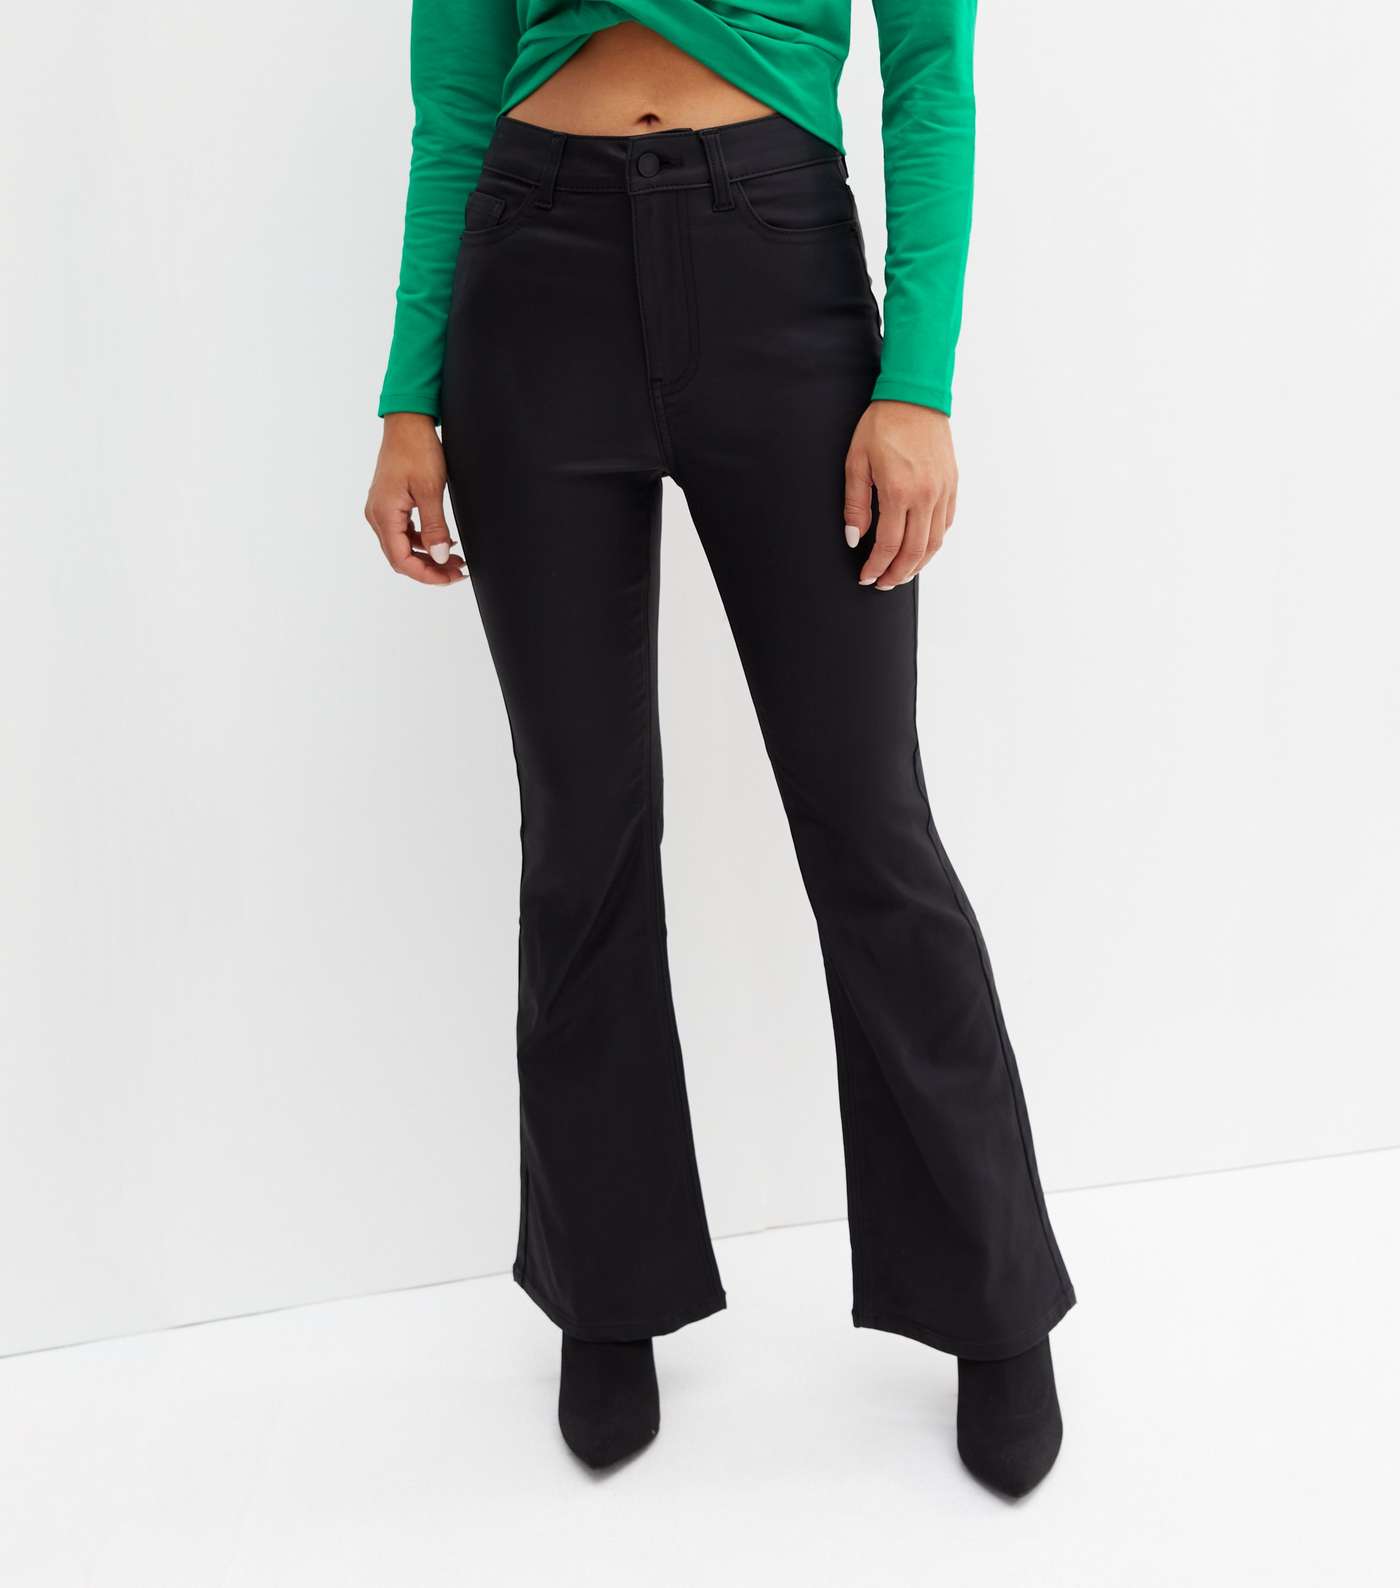 Petite Black Coated Leather-Look Waist Enhance Quinn Bootcut Jeans Image 2